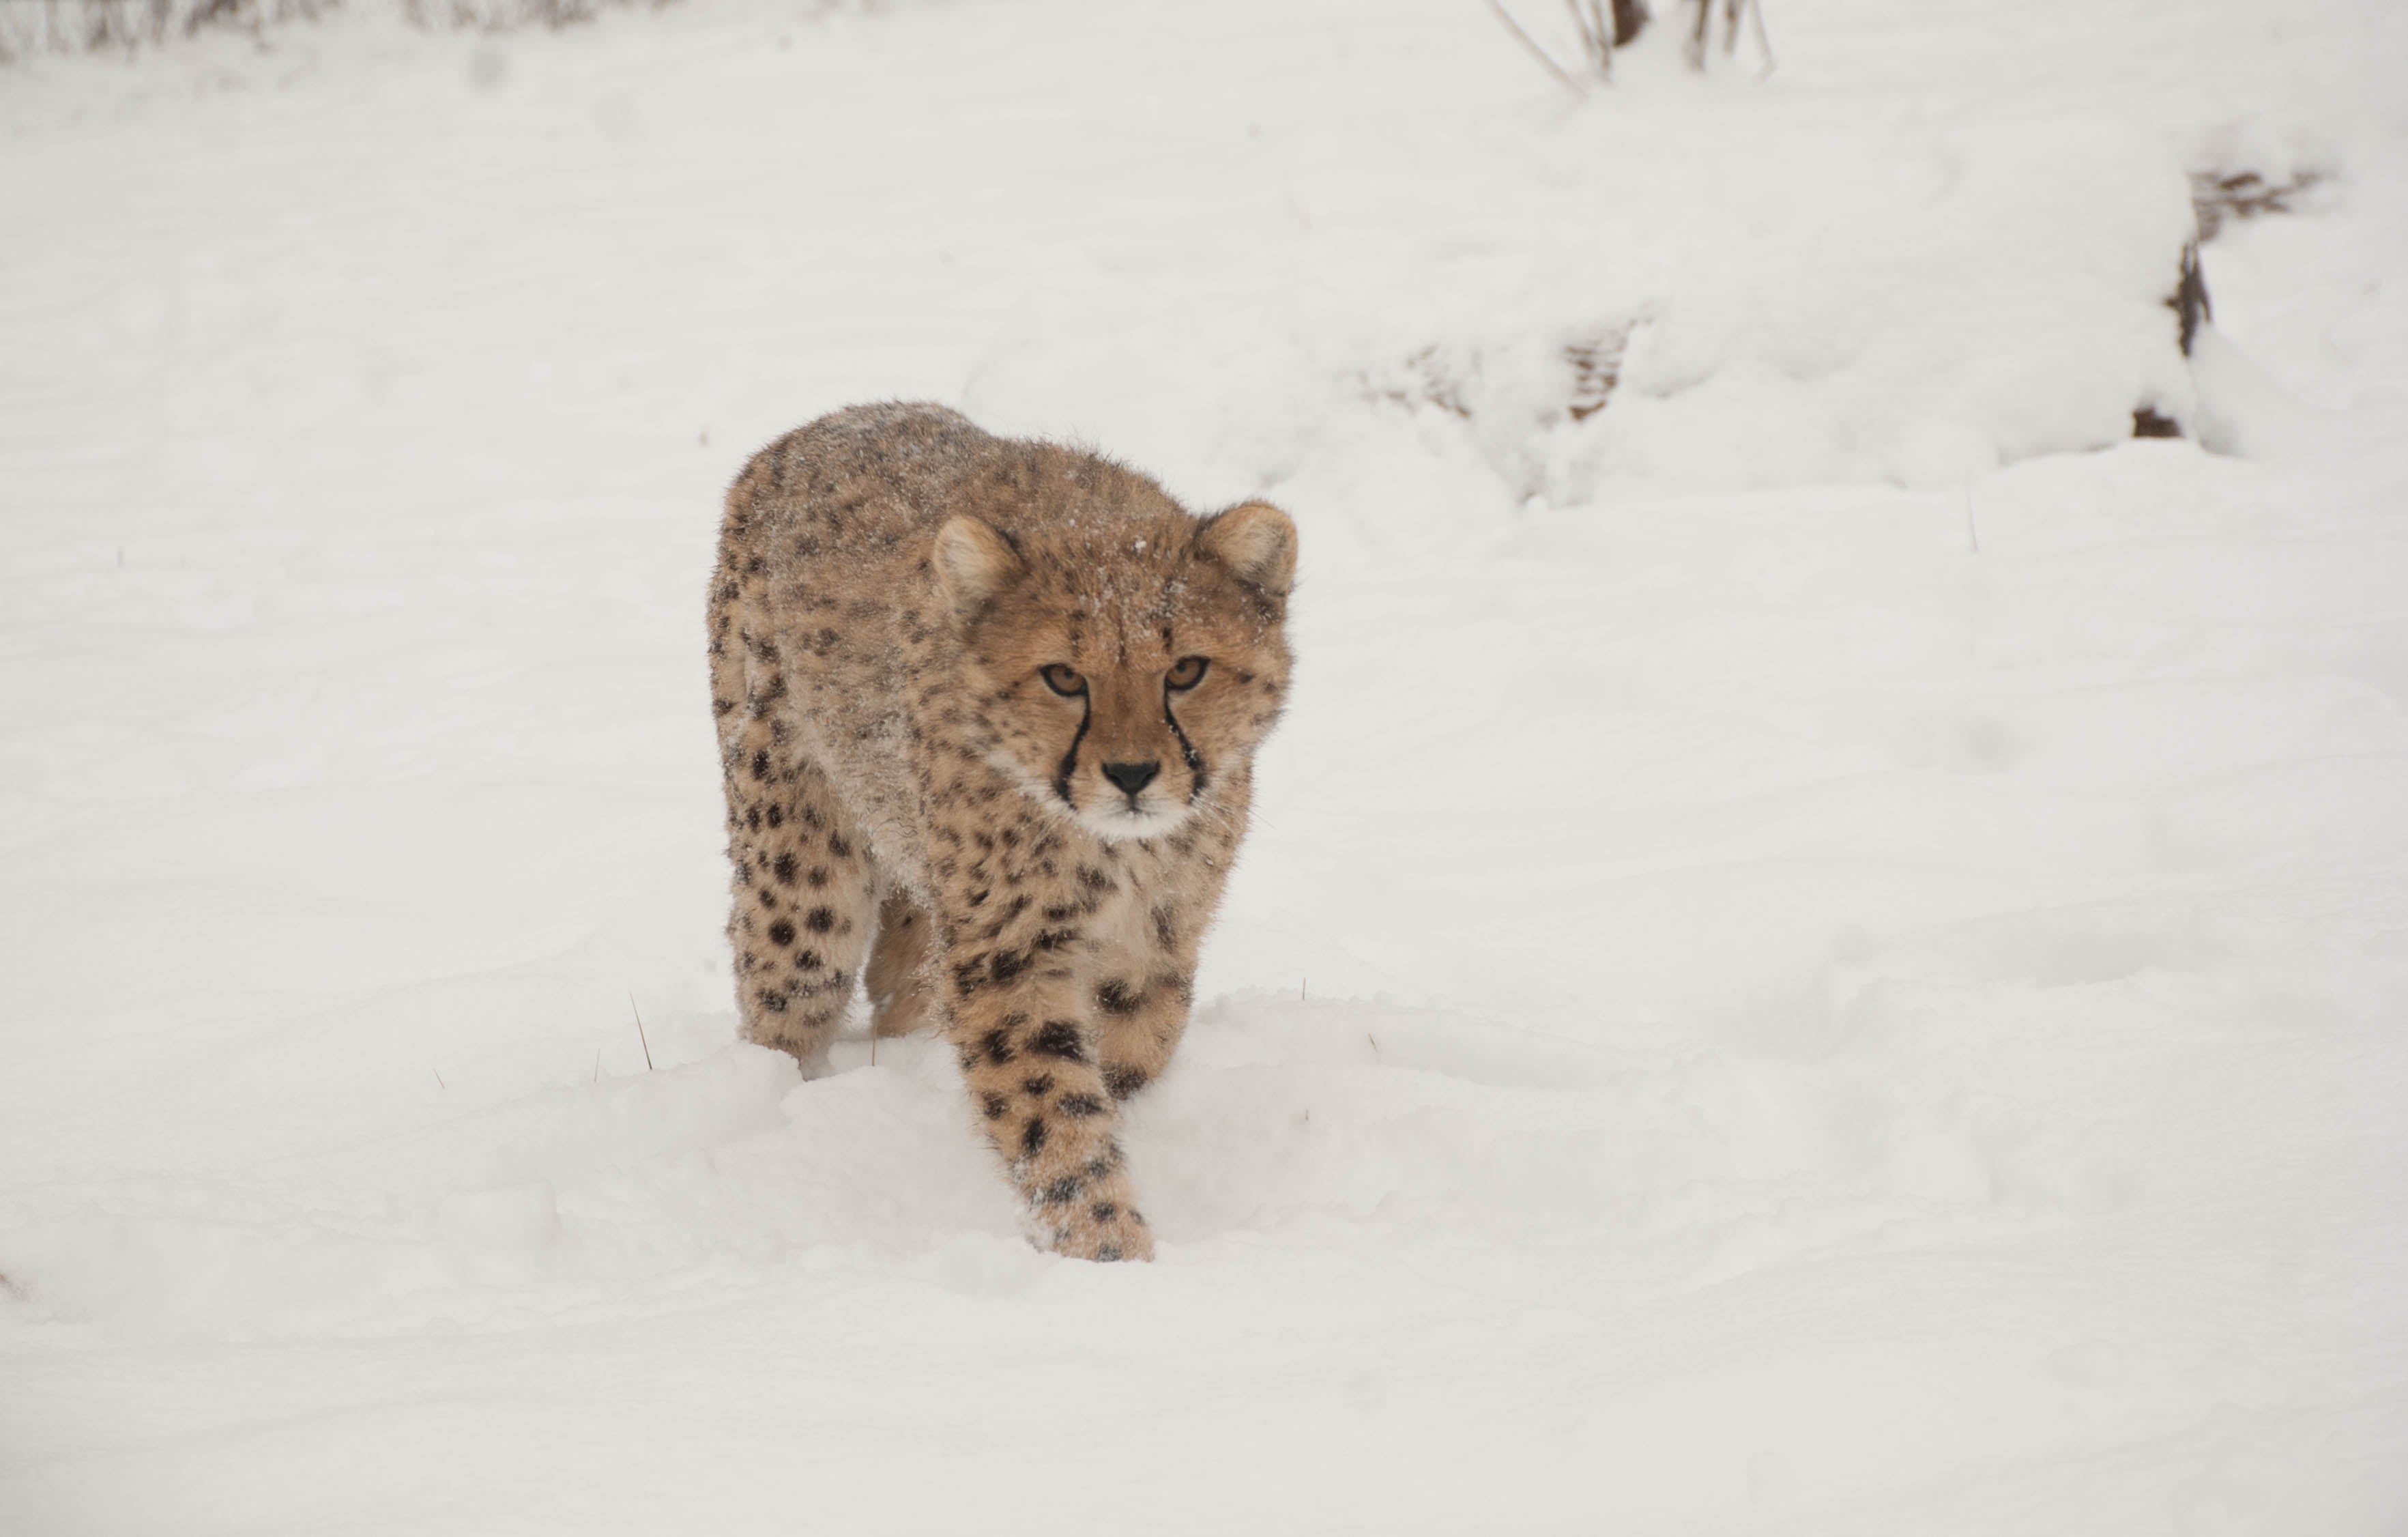 A cheetah walking through snow toward the camera